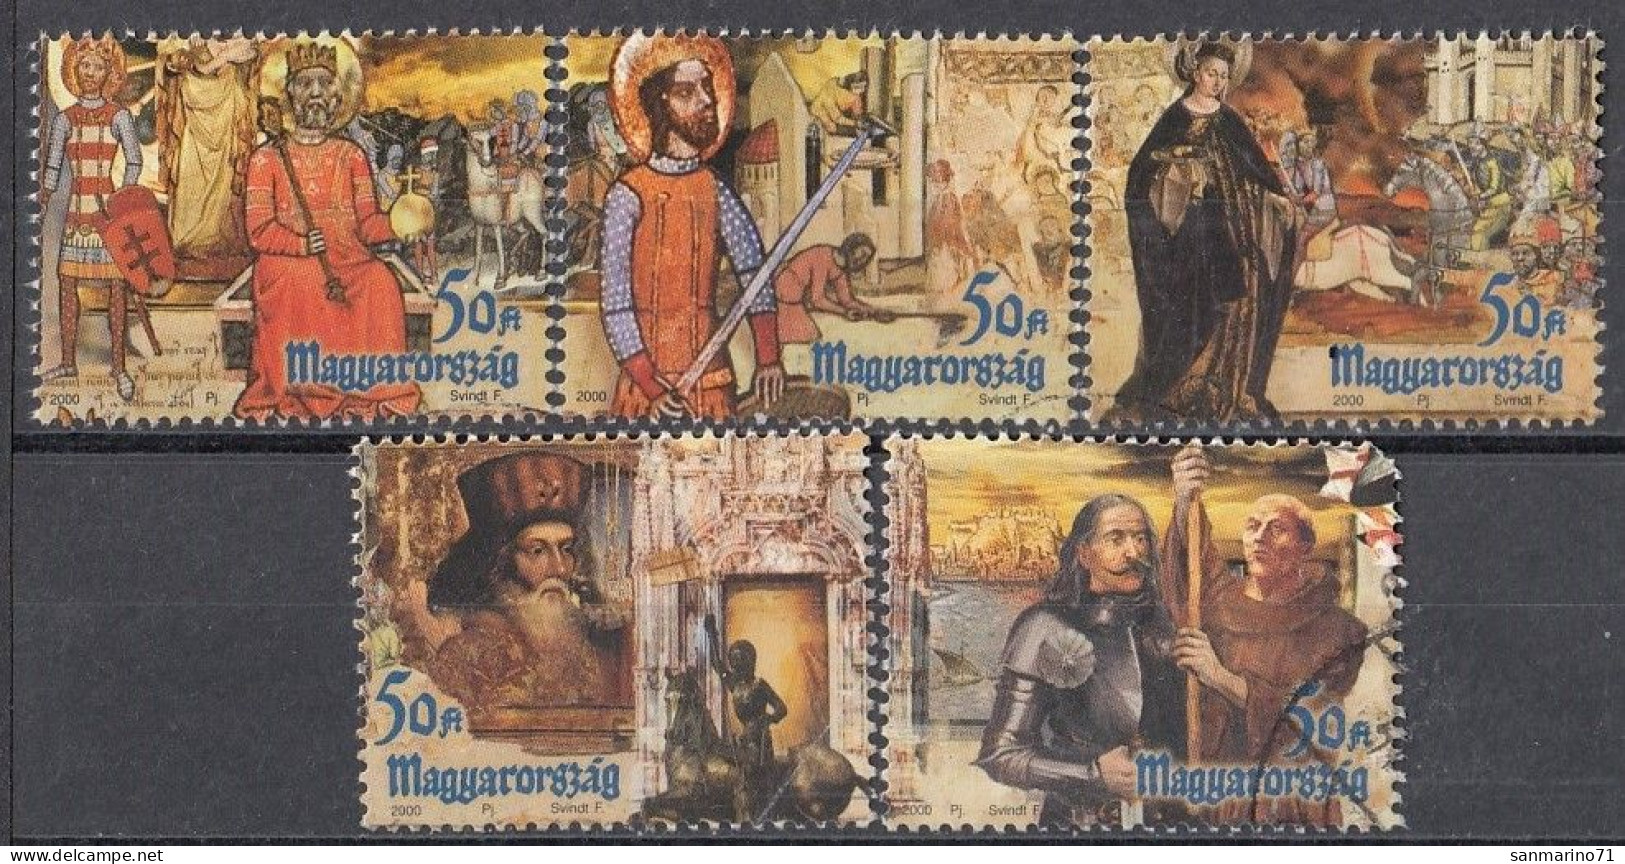 HUNGARY 4616-4620,used,last Stamp Damage Up Right Side - Gebruikt